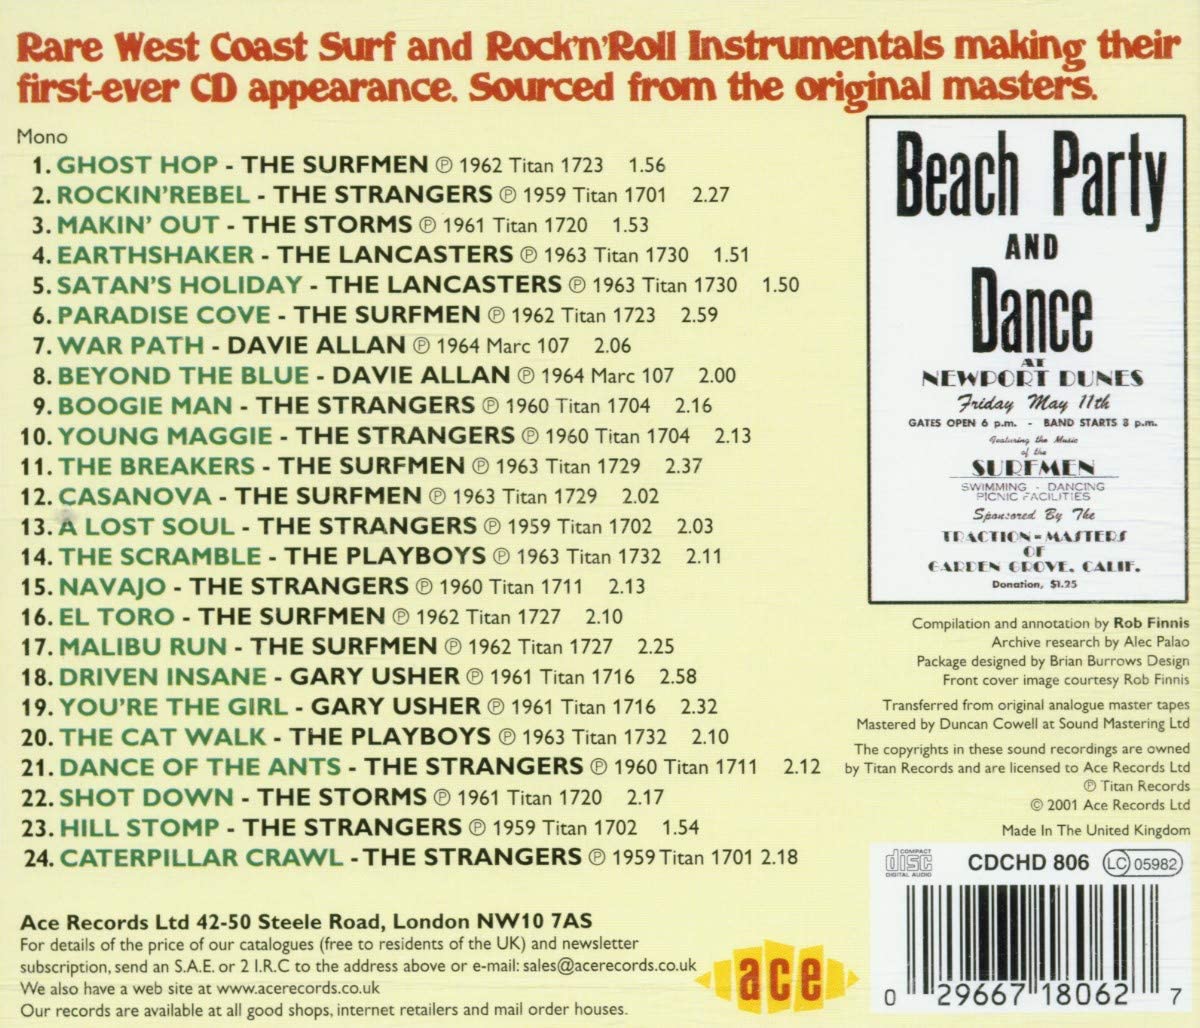 VA- Rare West Coast Surf Instrumentals (2001)